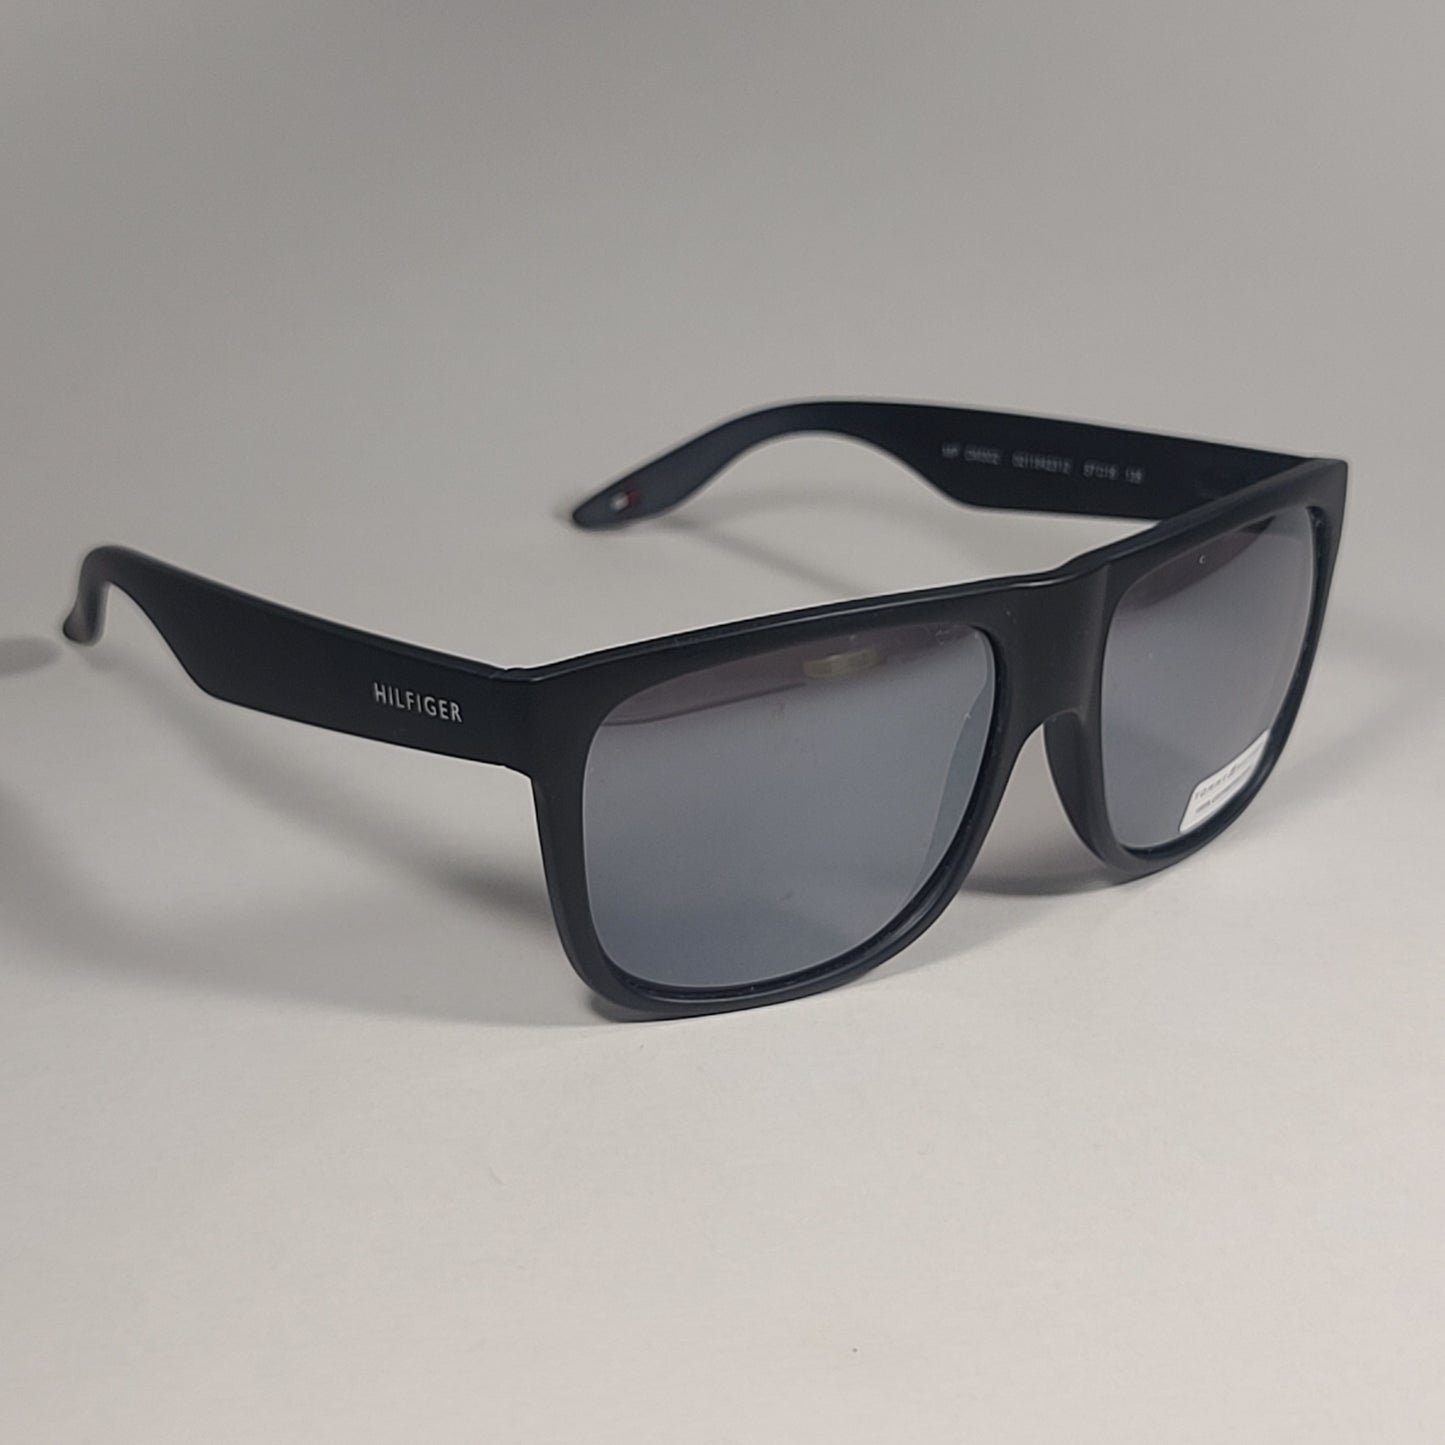 Tommy Hilfiger "Tanner" MP OM302 Square Sunglasses Matte Black Silver Mirror 57mm